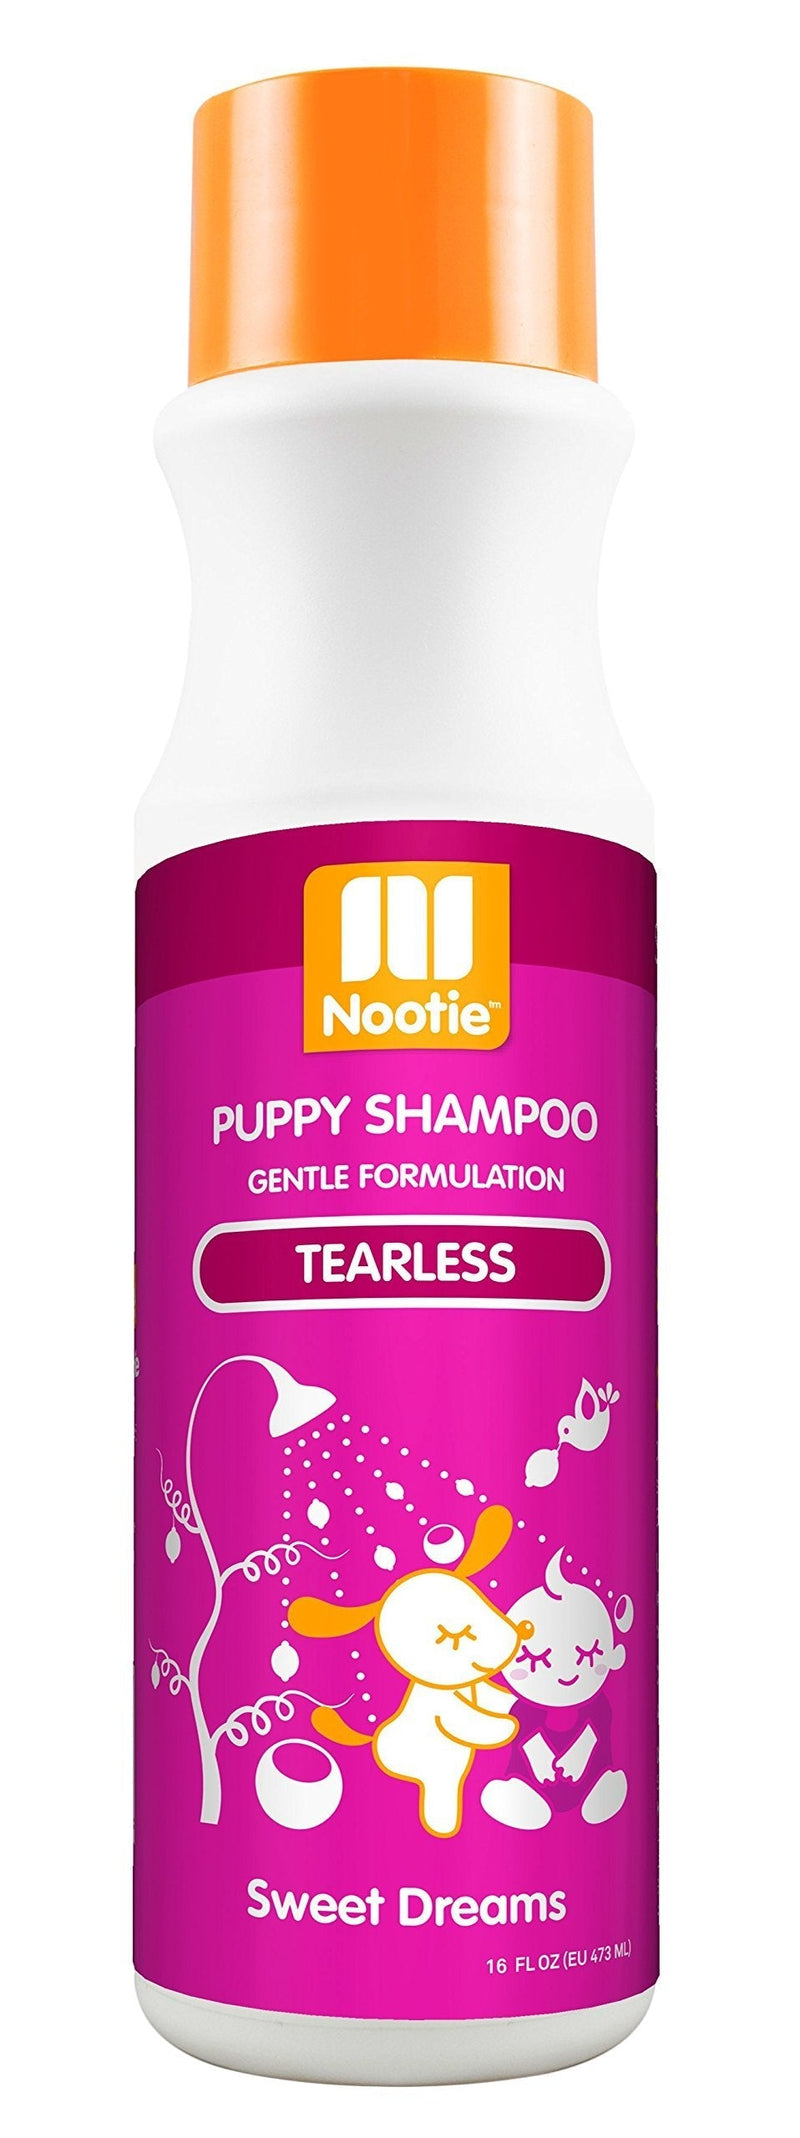 [Australia] - Nootie Tearless Puppy Shampoo - Sweet Dreams - 16 fl oz 